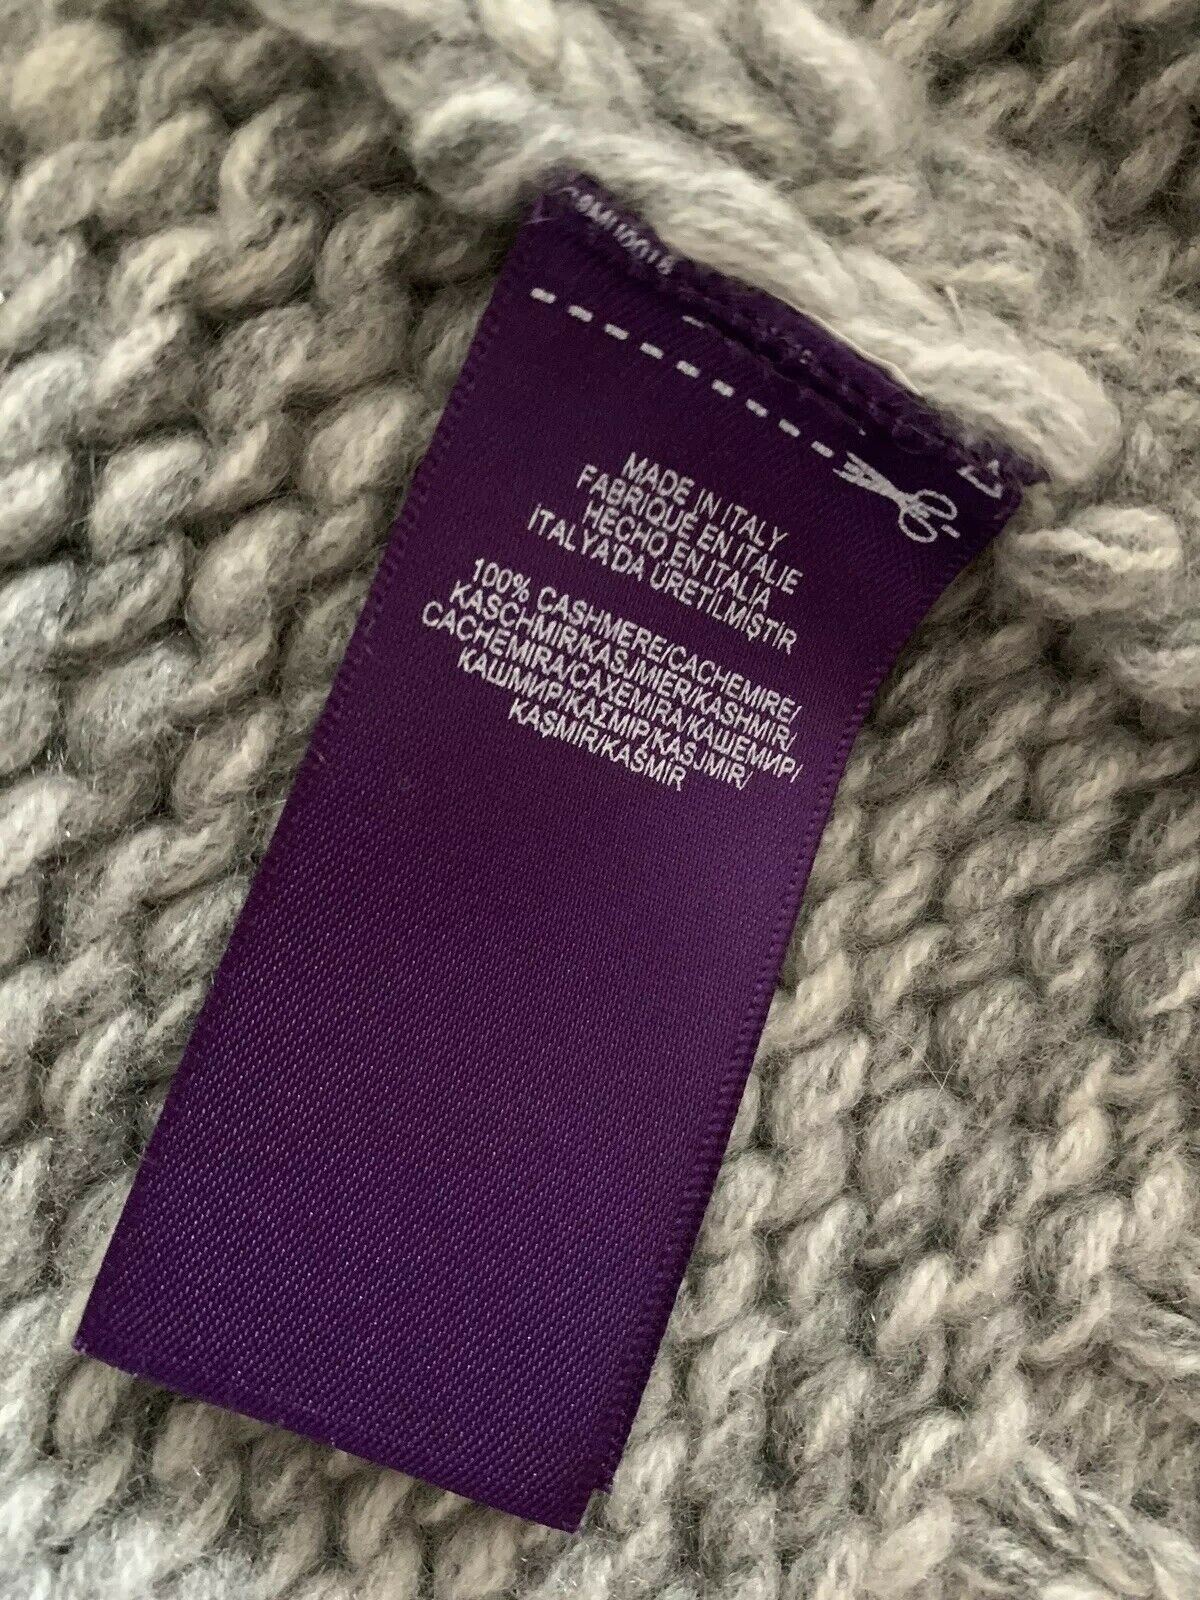 NWT $2495 Ralph Lauren Purple Label Men Cashmere Cardigan Sweater Gray XL Italy